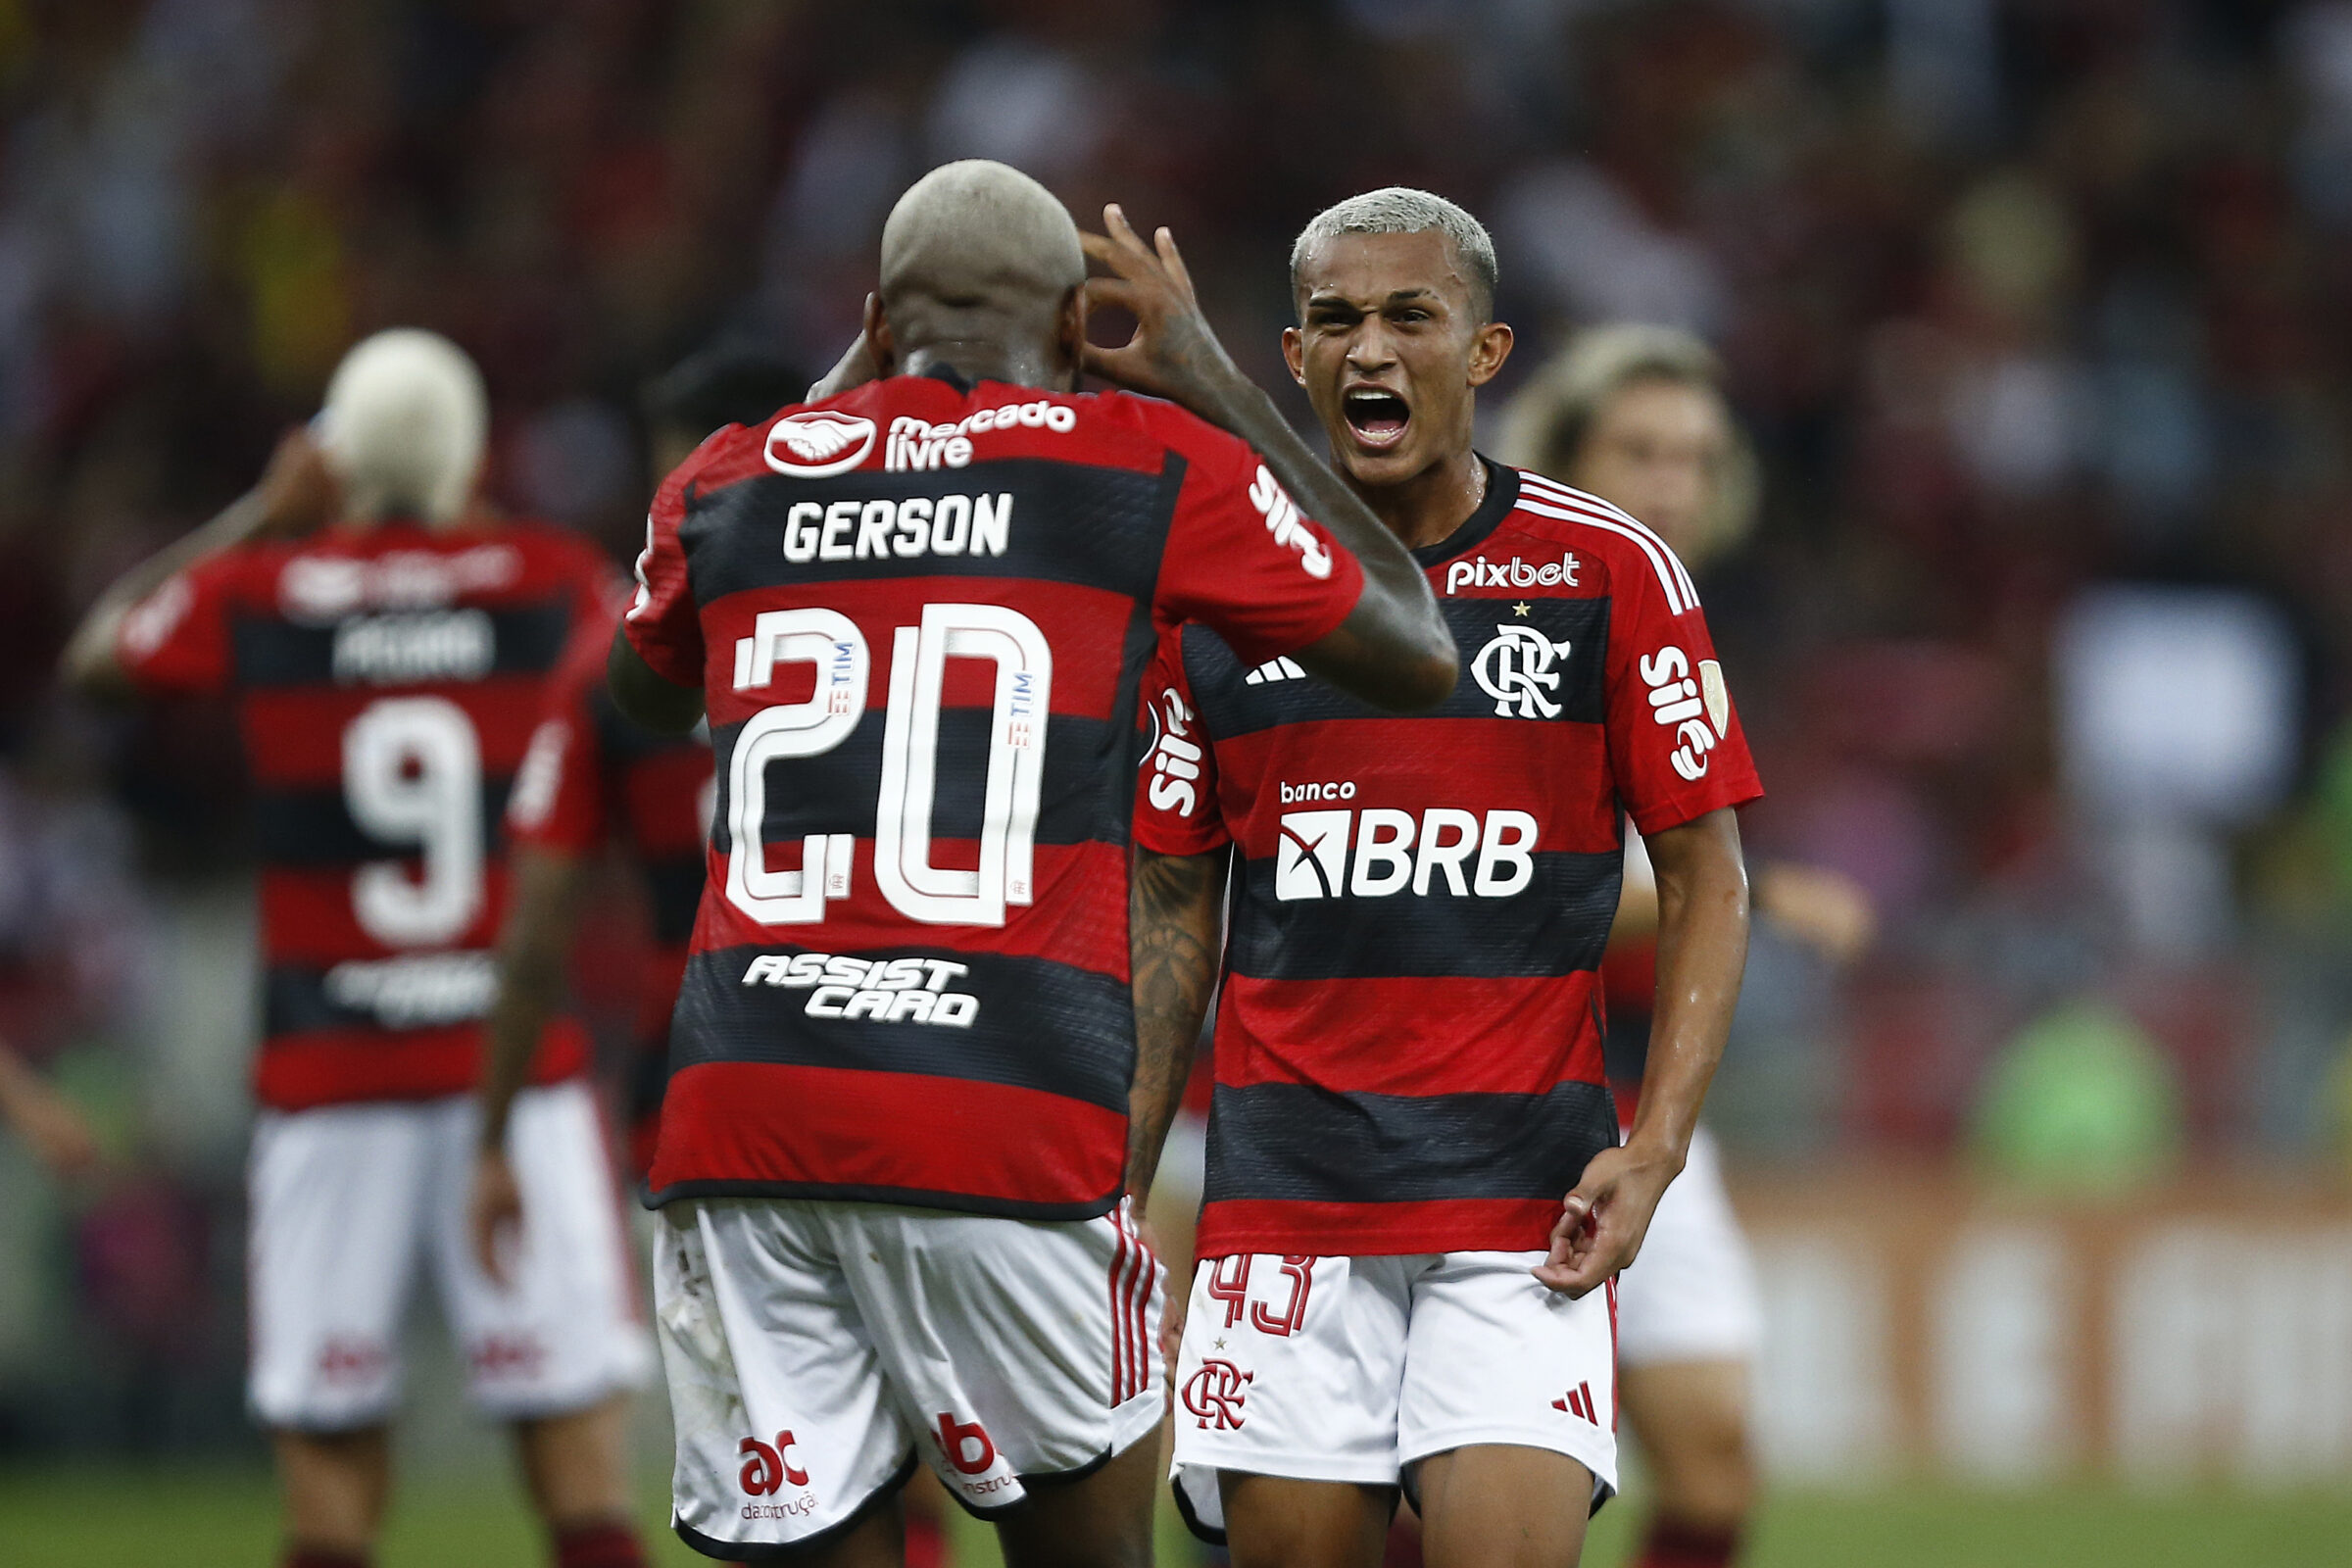 Wesley volta a desfalcar o Flamengo após 20 jogos - Coluna do Fla